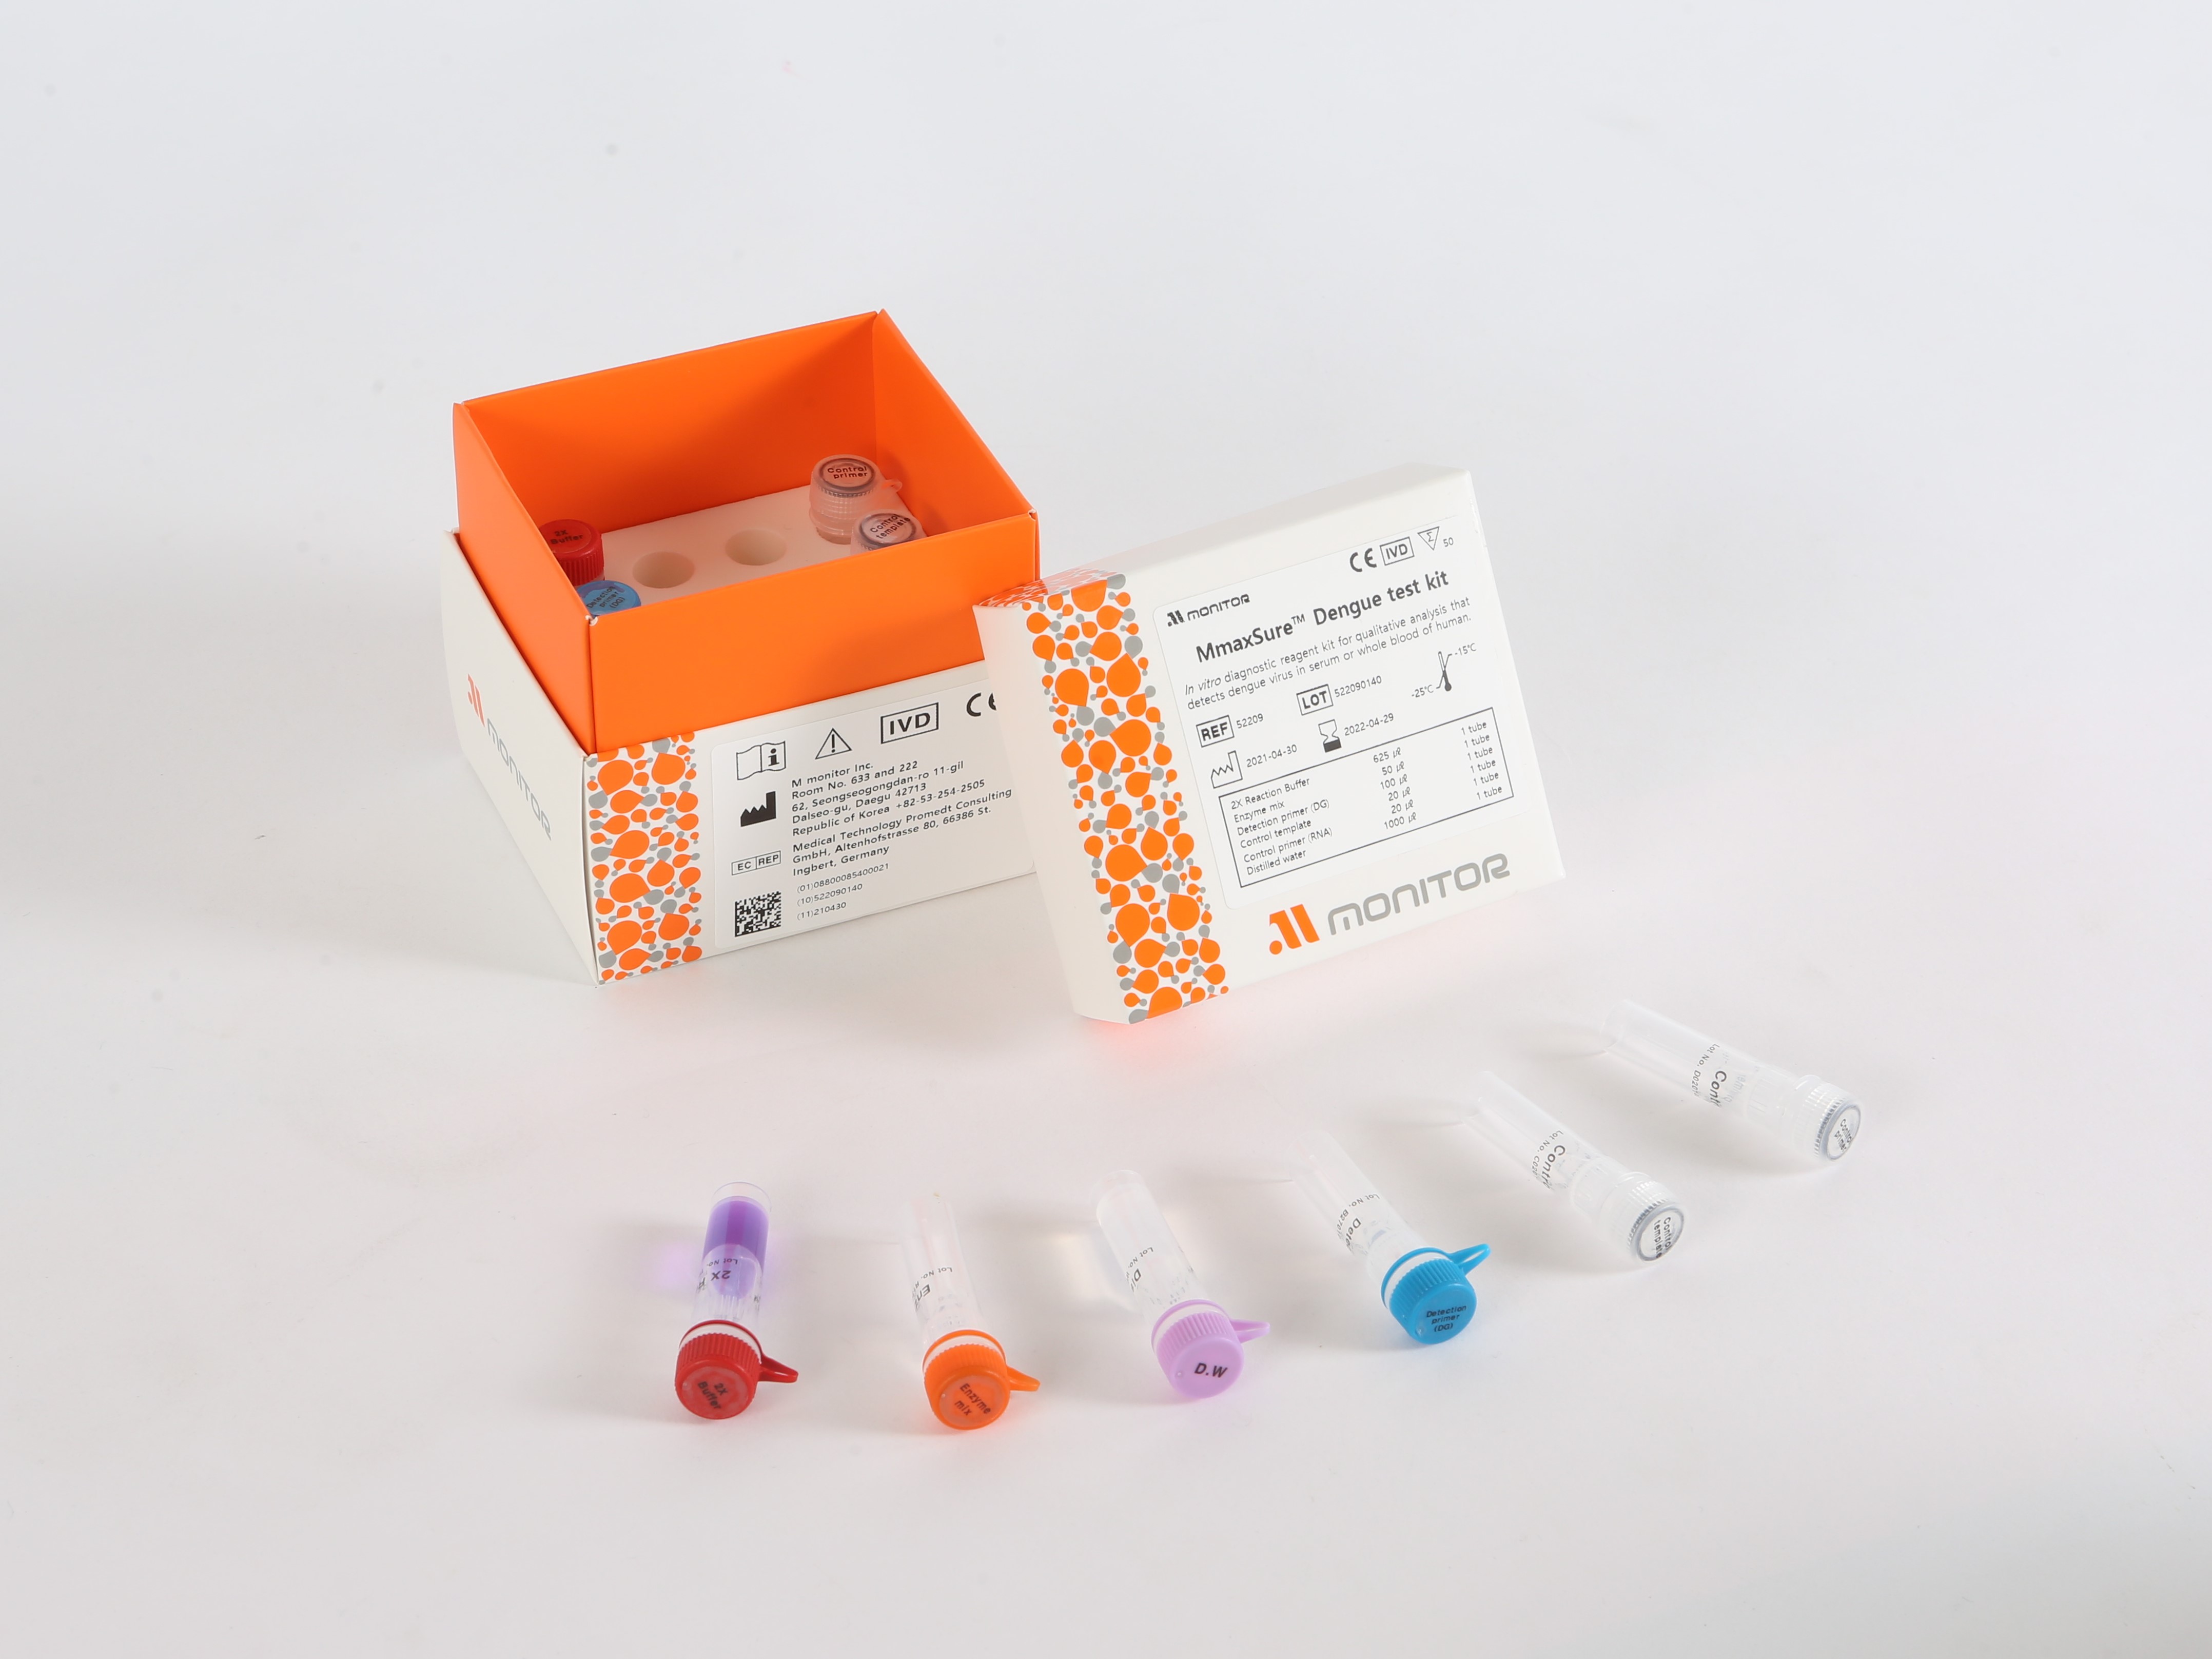 [New launch] MmaxSure™ Dengue Test Kit